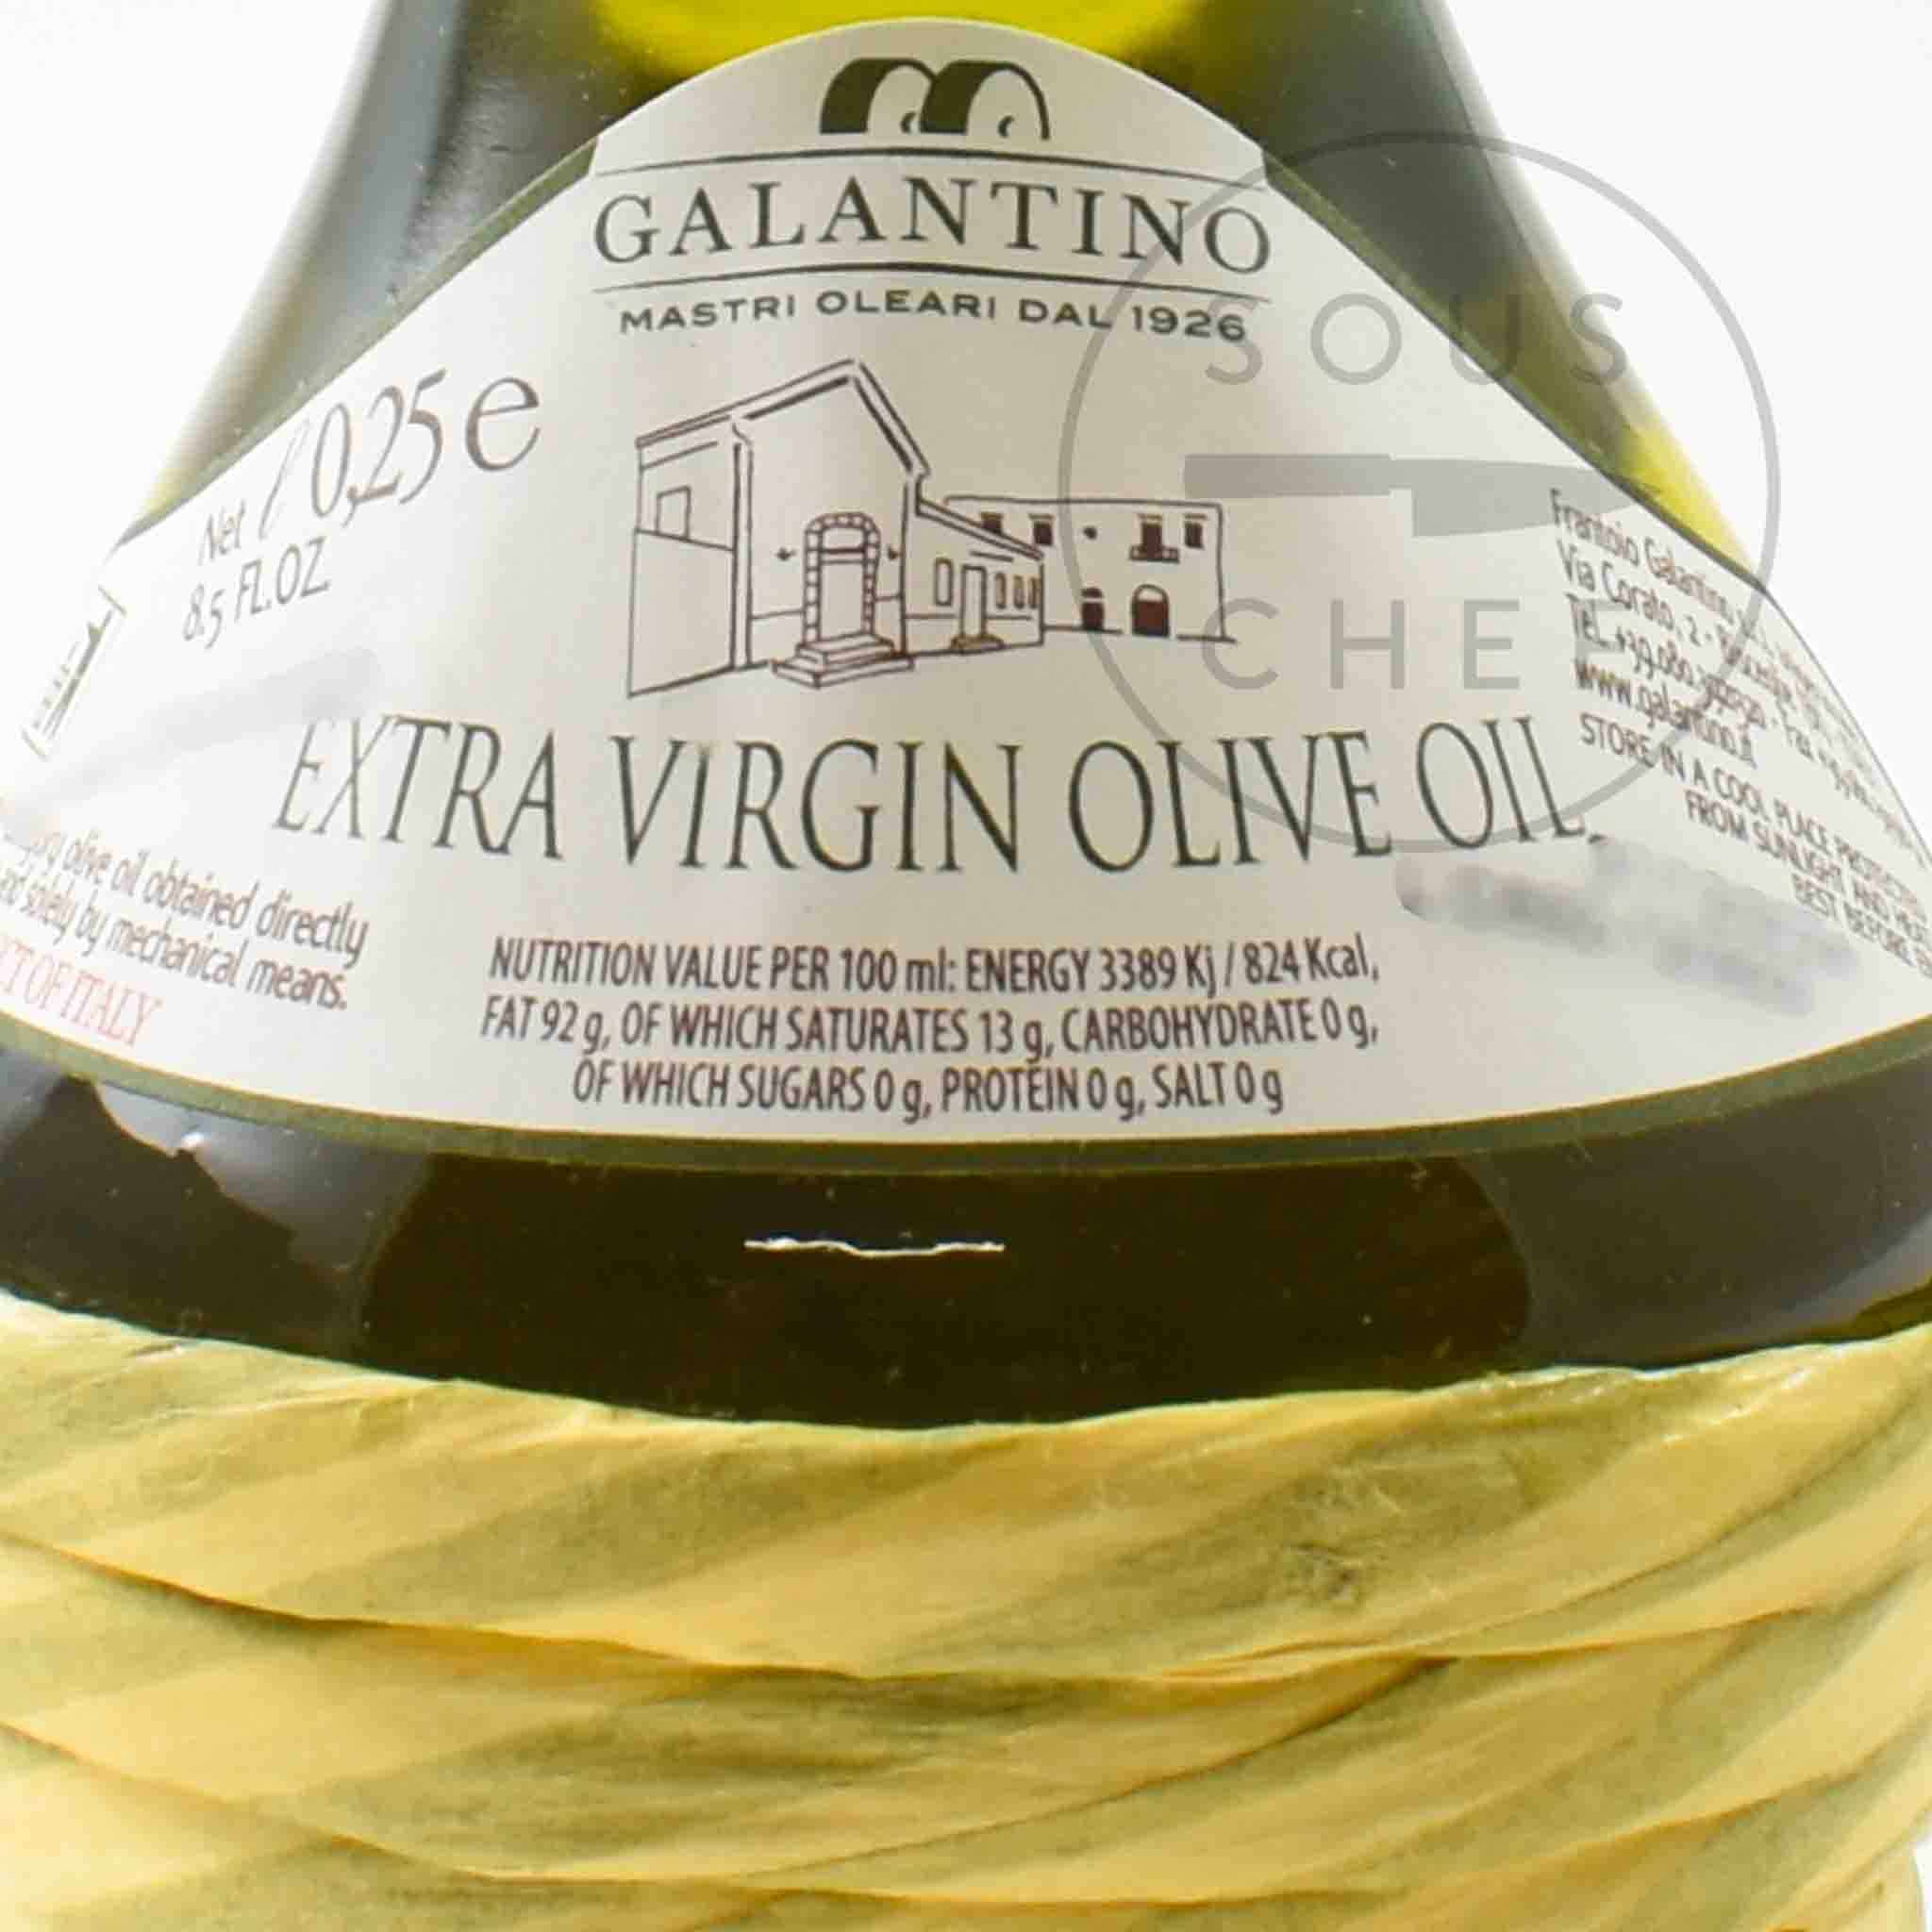 Galantino Tuscia Corda Extra Virgin Olive Oil, 250ml